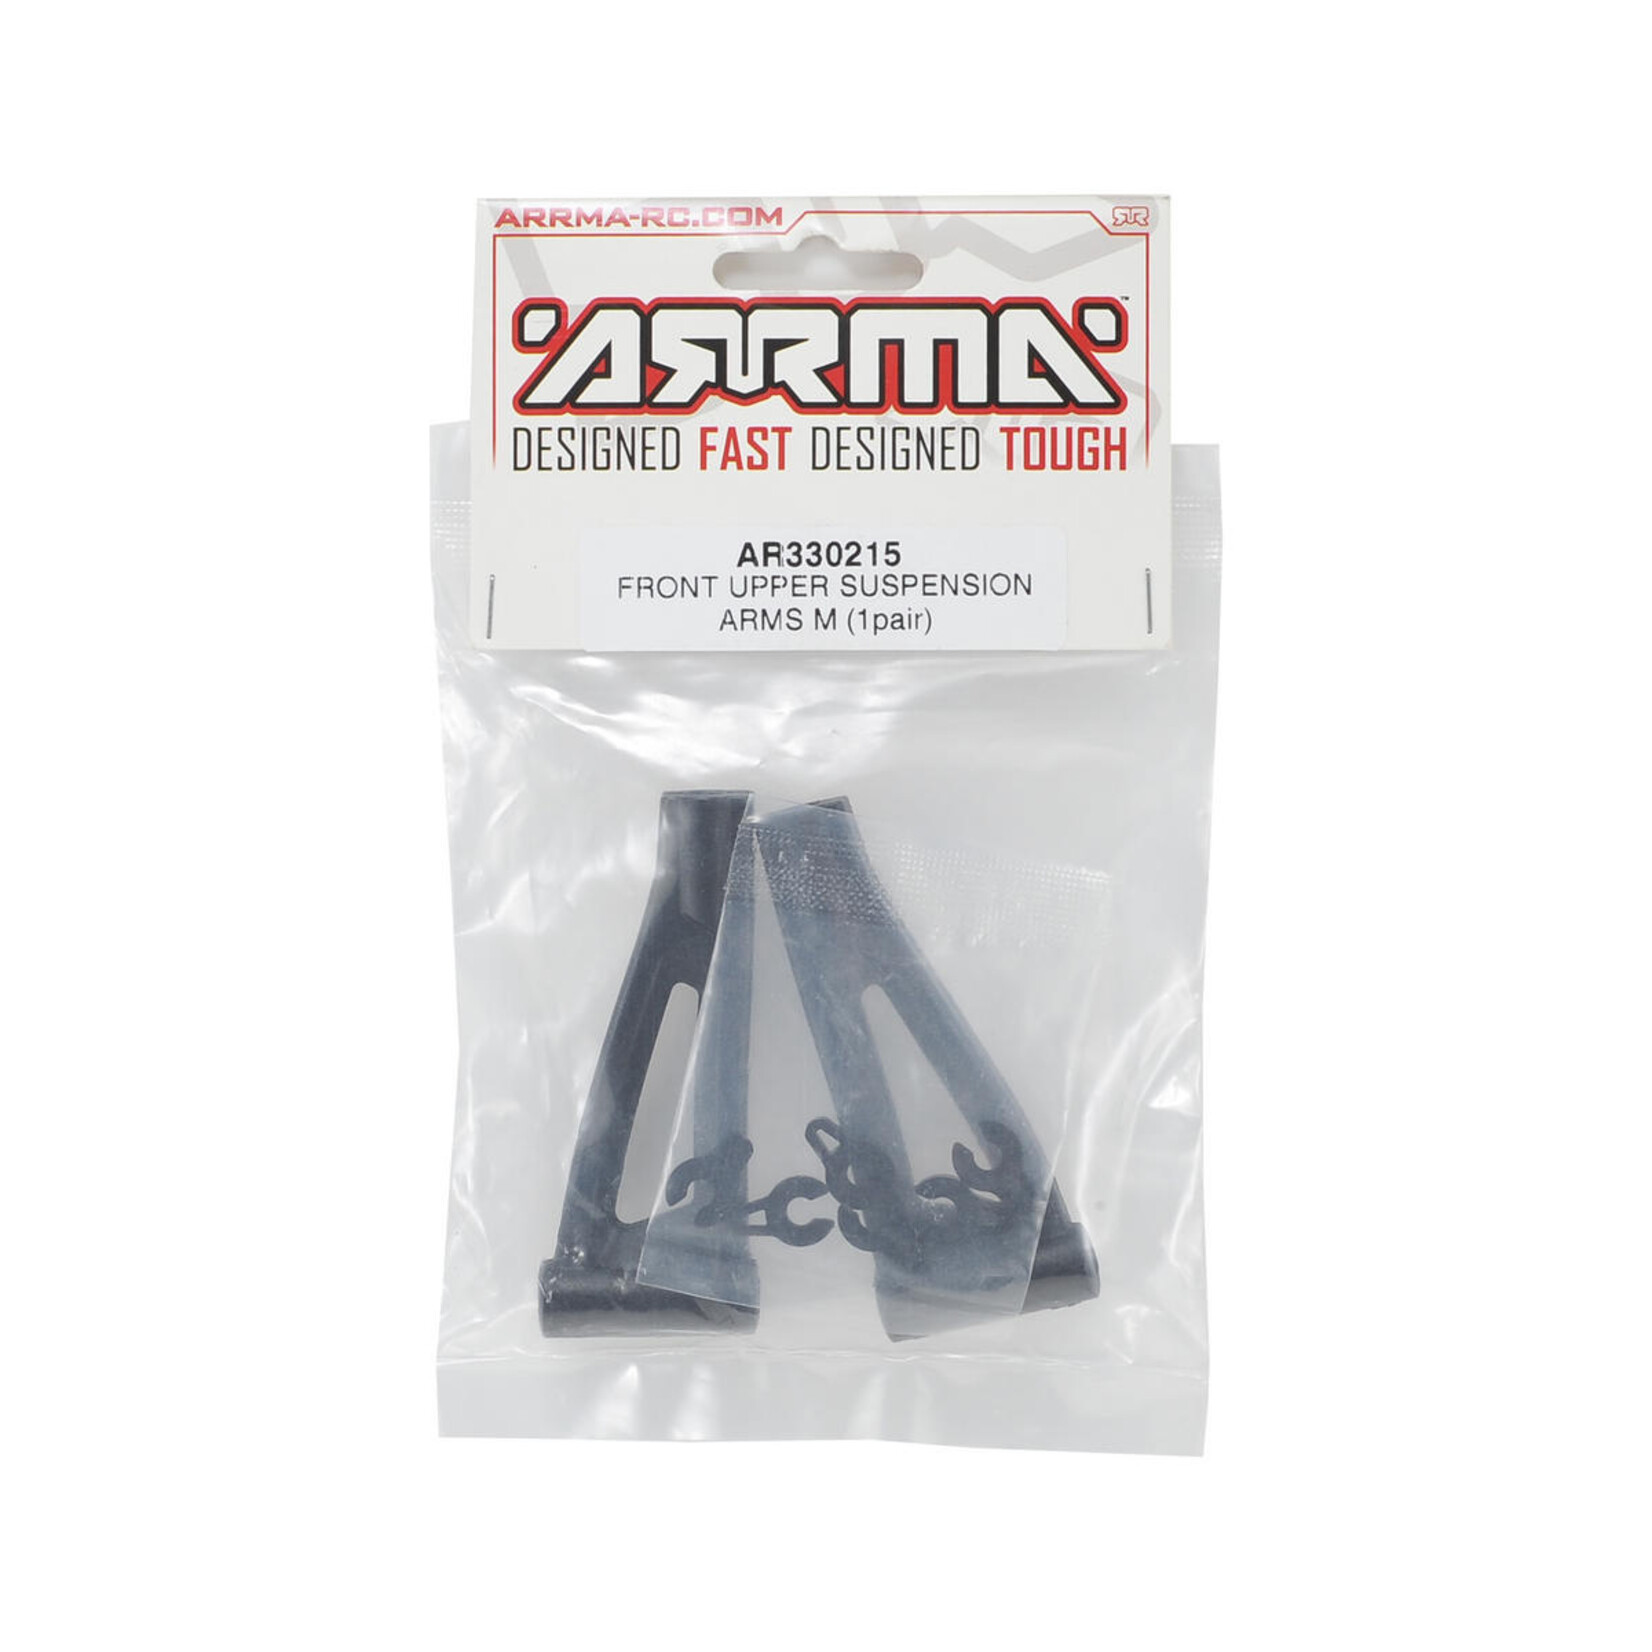 ARRMA Arrma Front Upper Suspension Arm (2) #AR330215